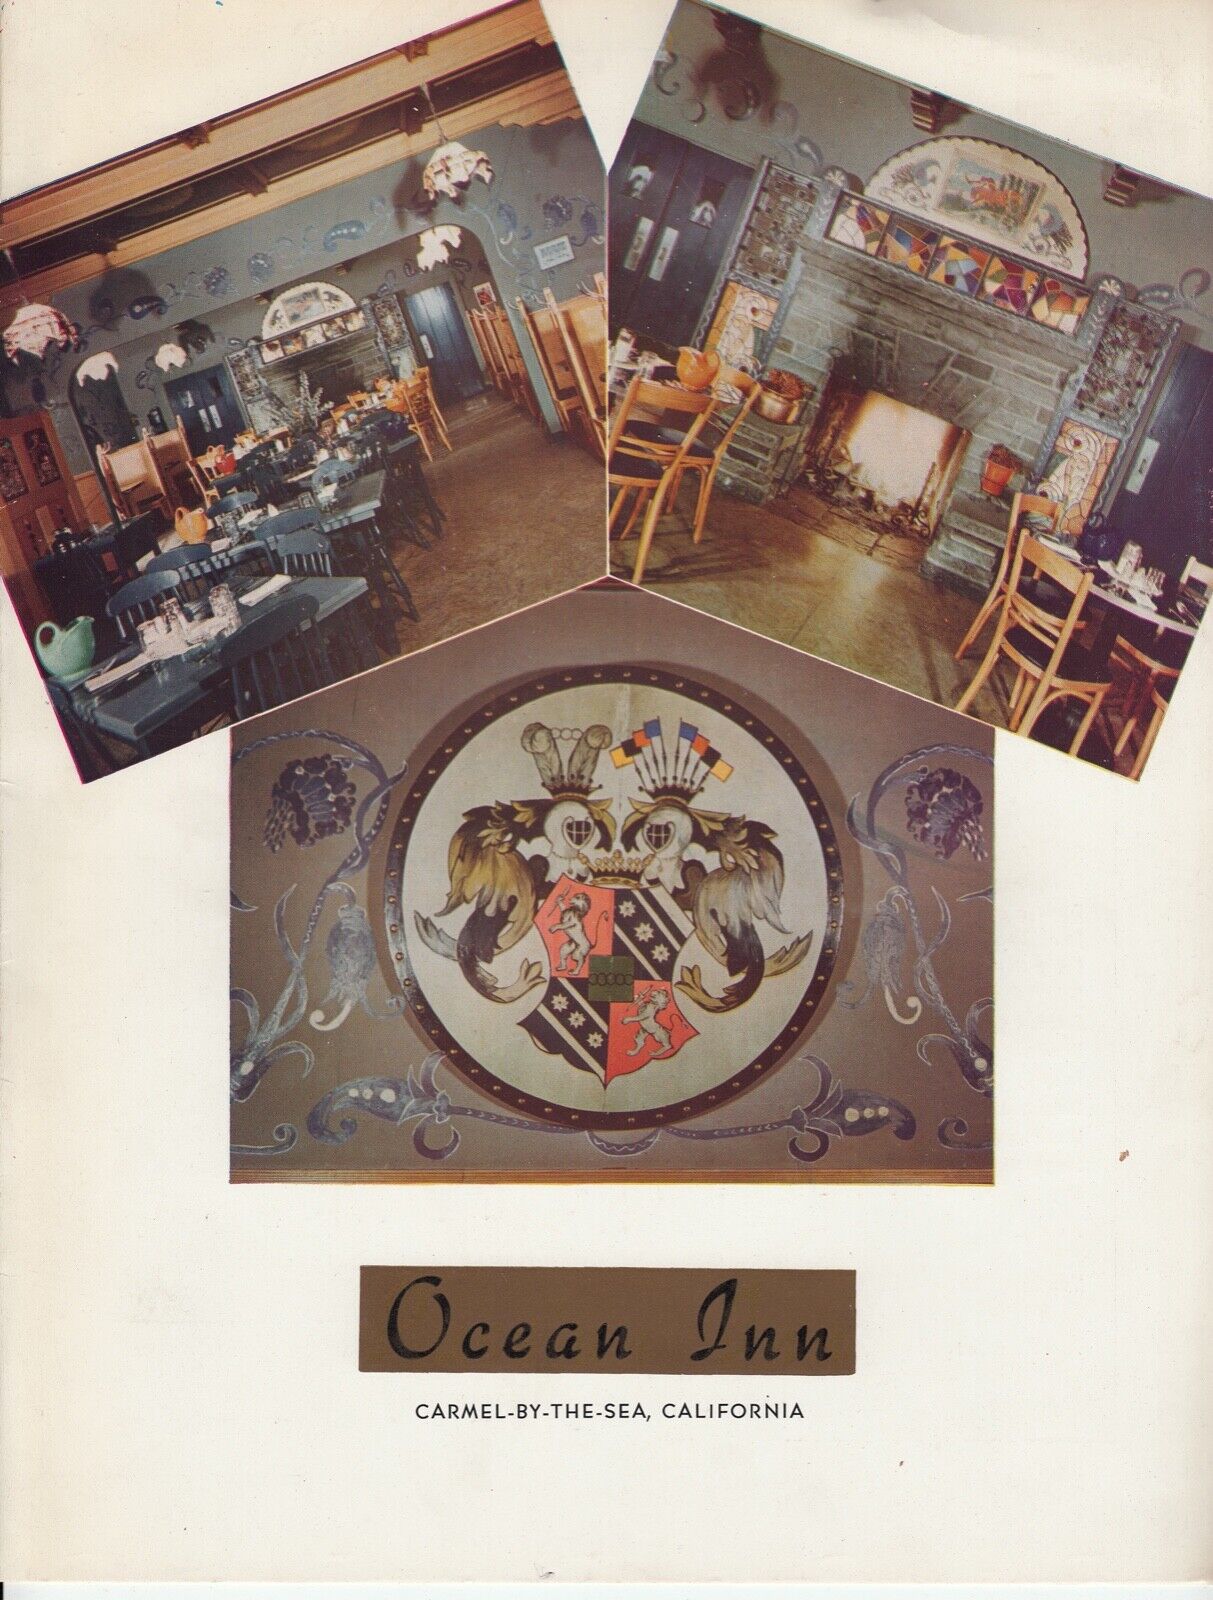 Vintage OCEAN INN Restaurant Menu, Carmel-By-The-Sea California